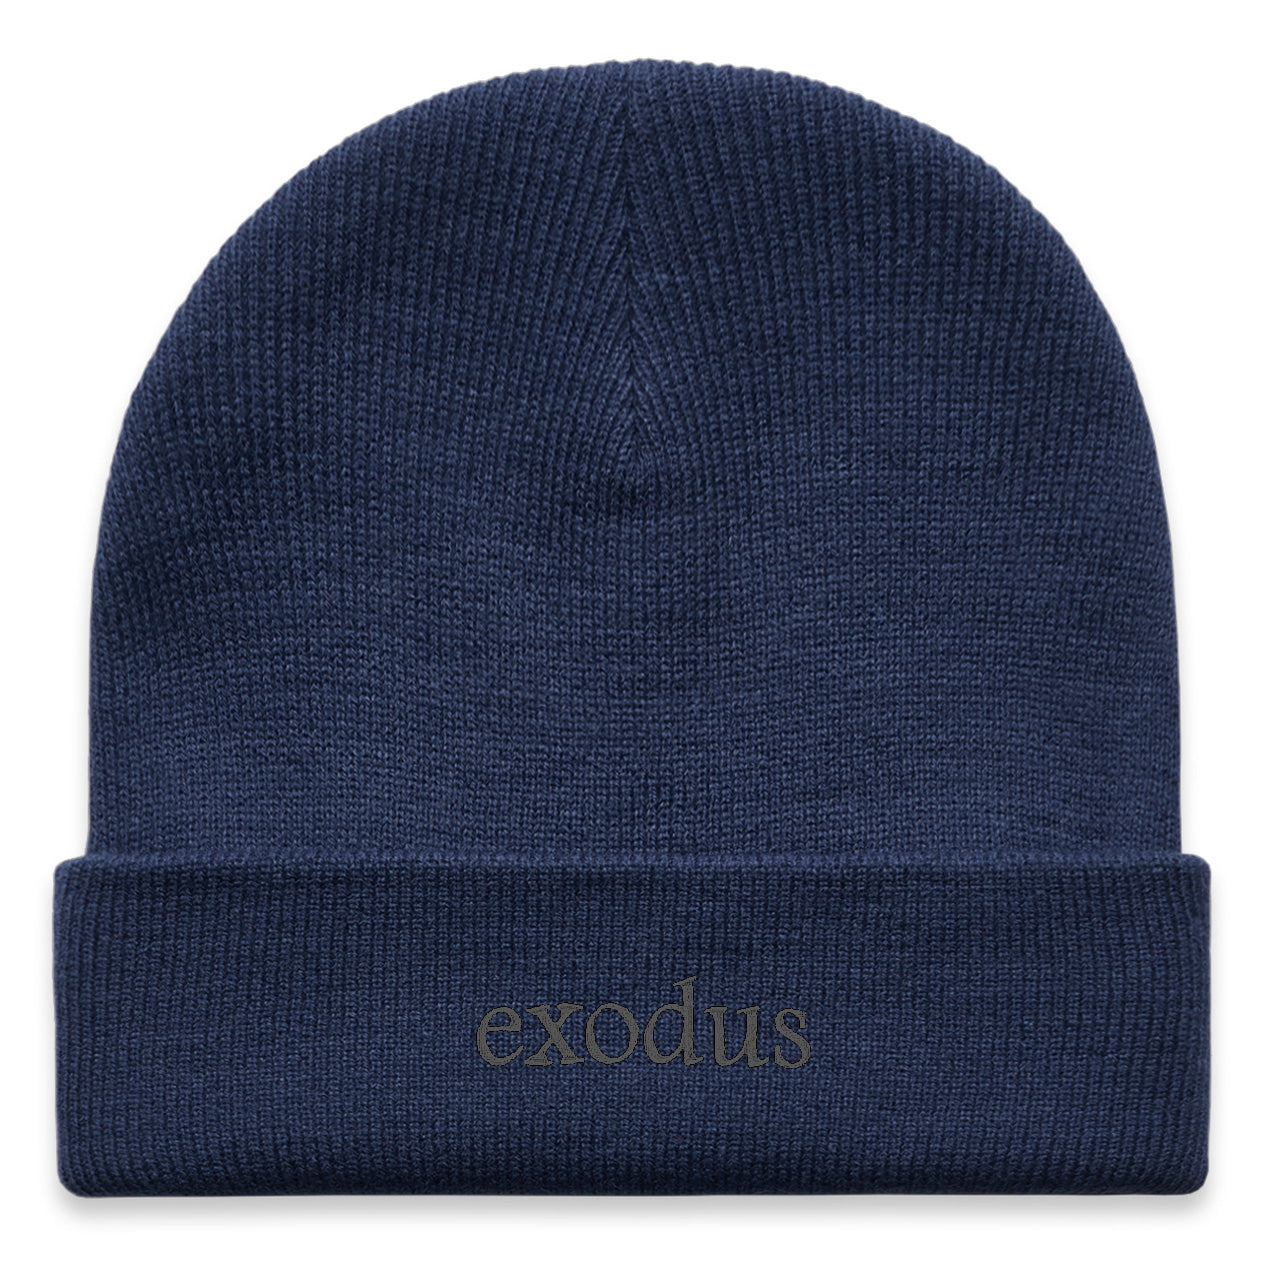 Exodus Clean Cuff Beanie - Dark Blue